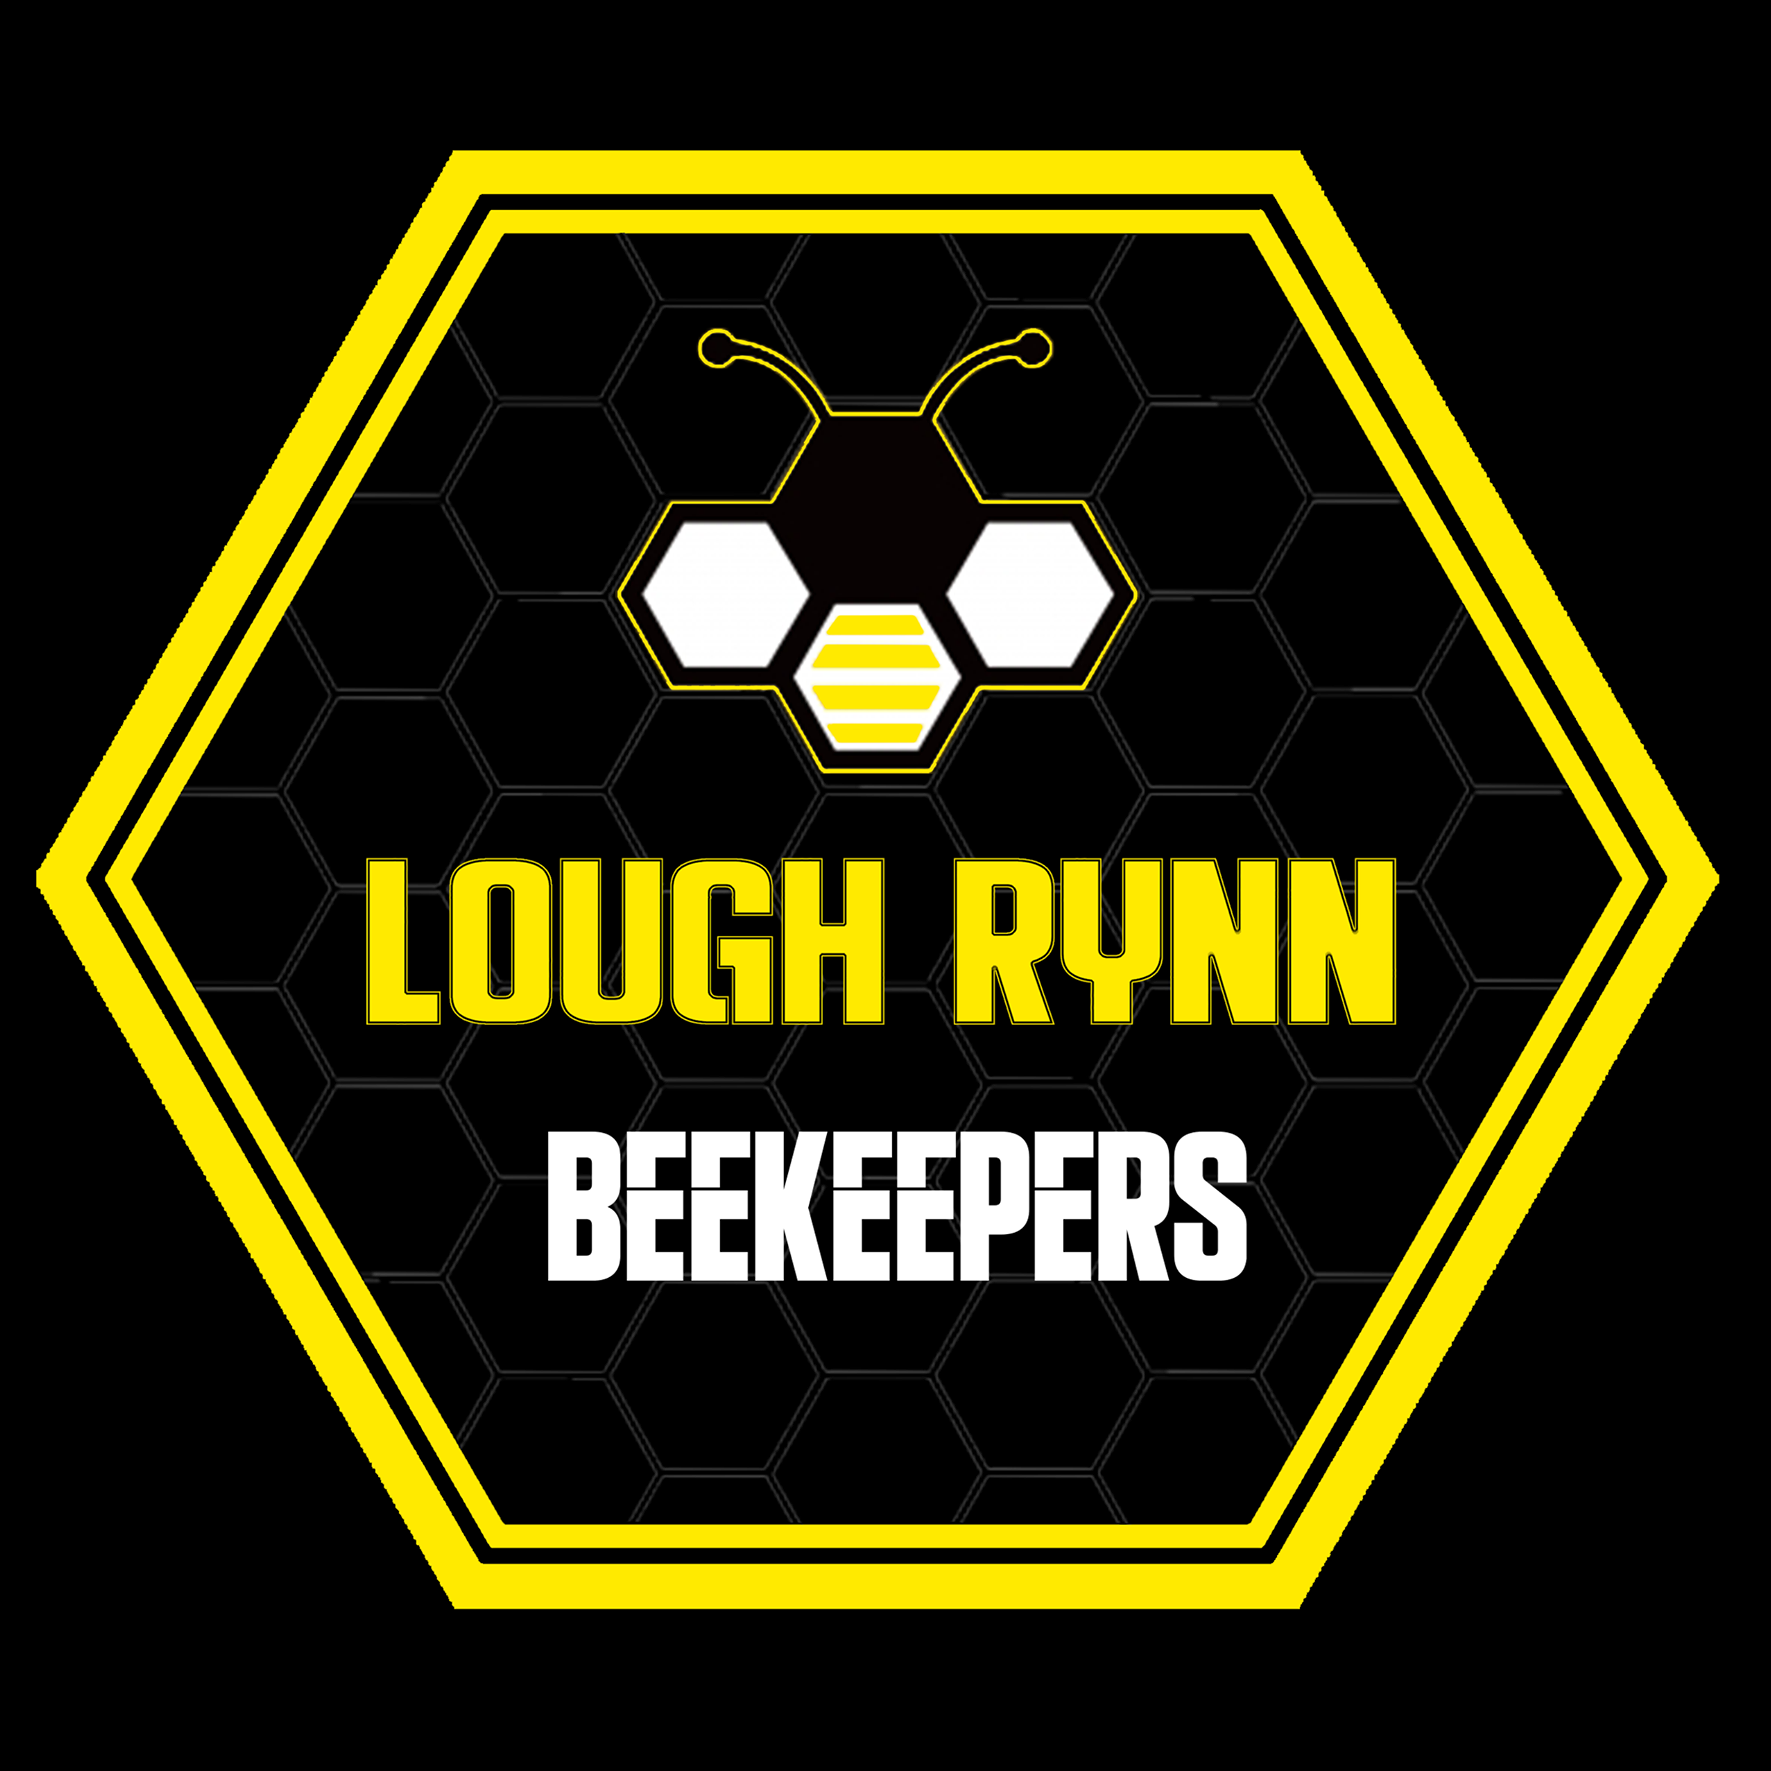 Lough Rynn Beekeepers